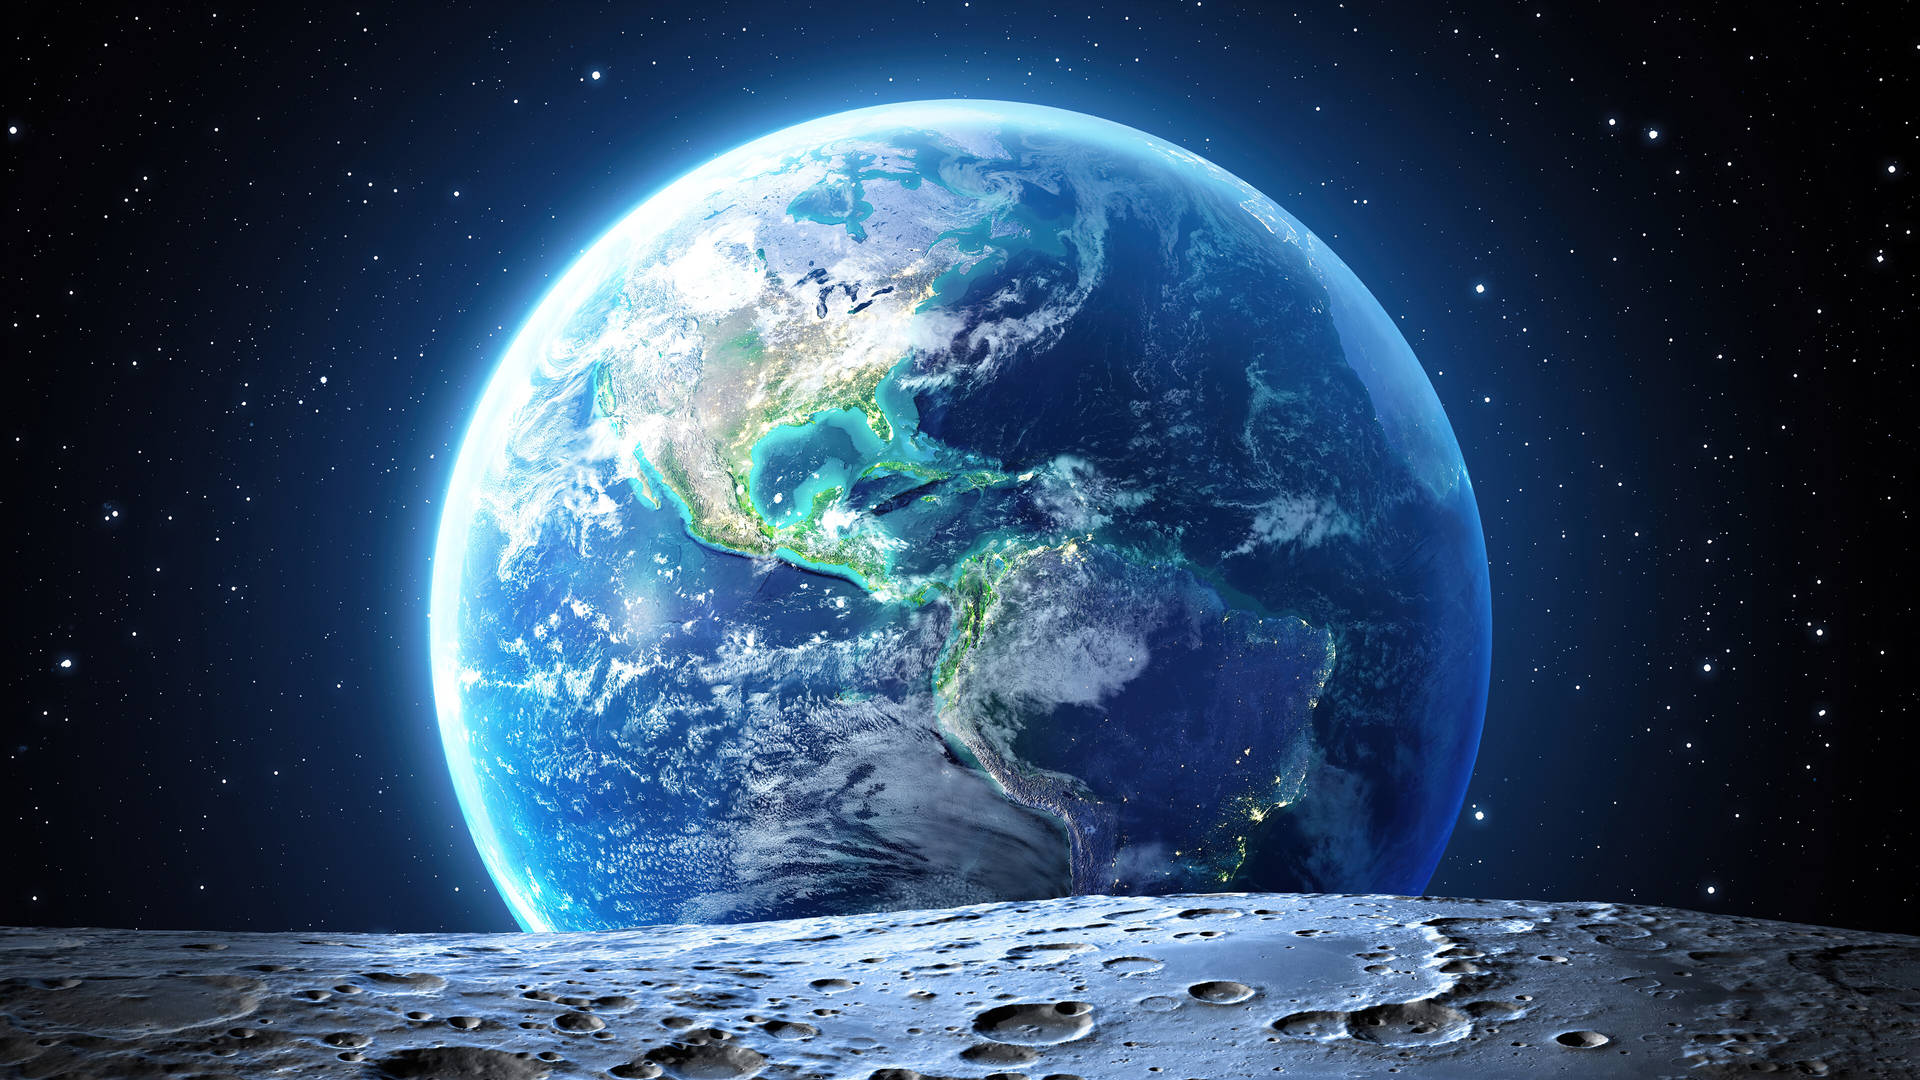 Live 4k Uhd Moon And Earth Wallpaper